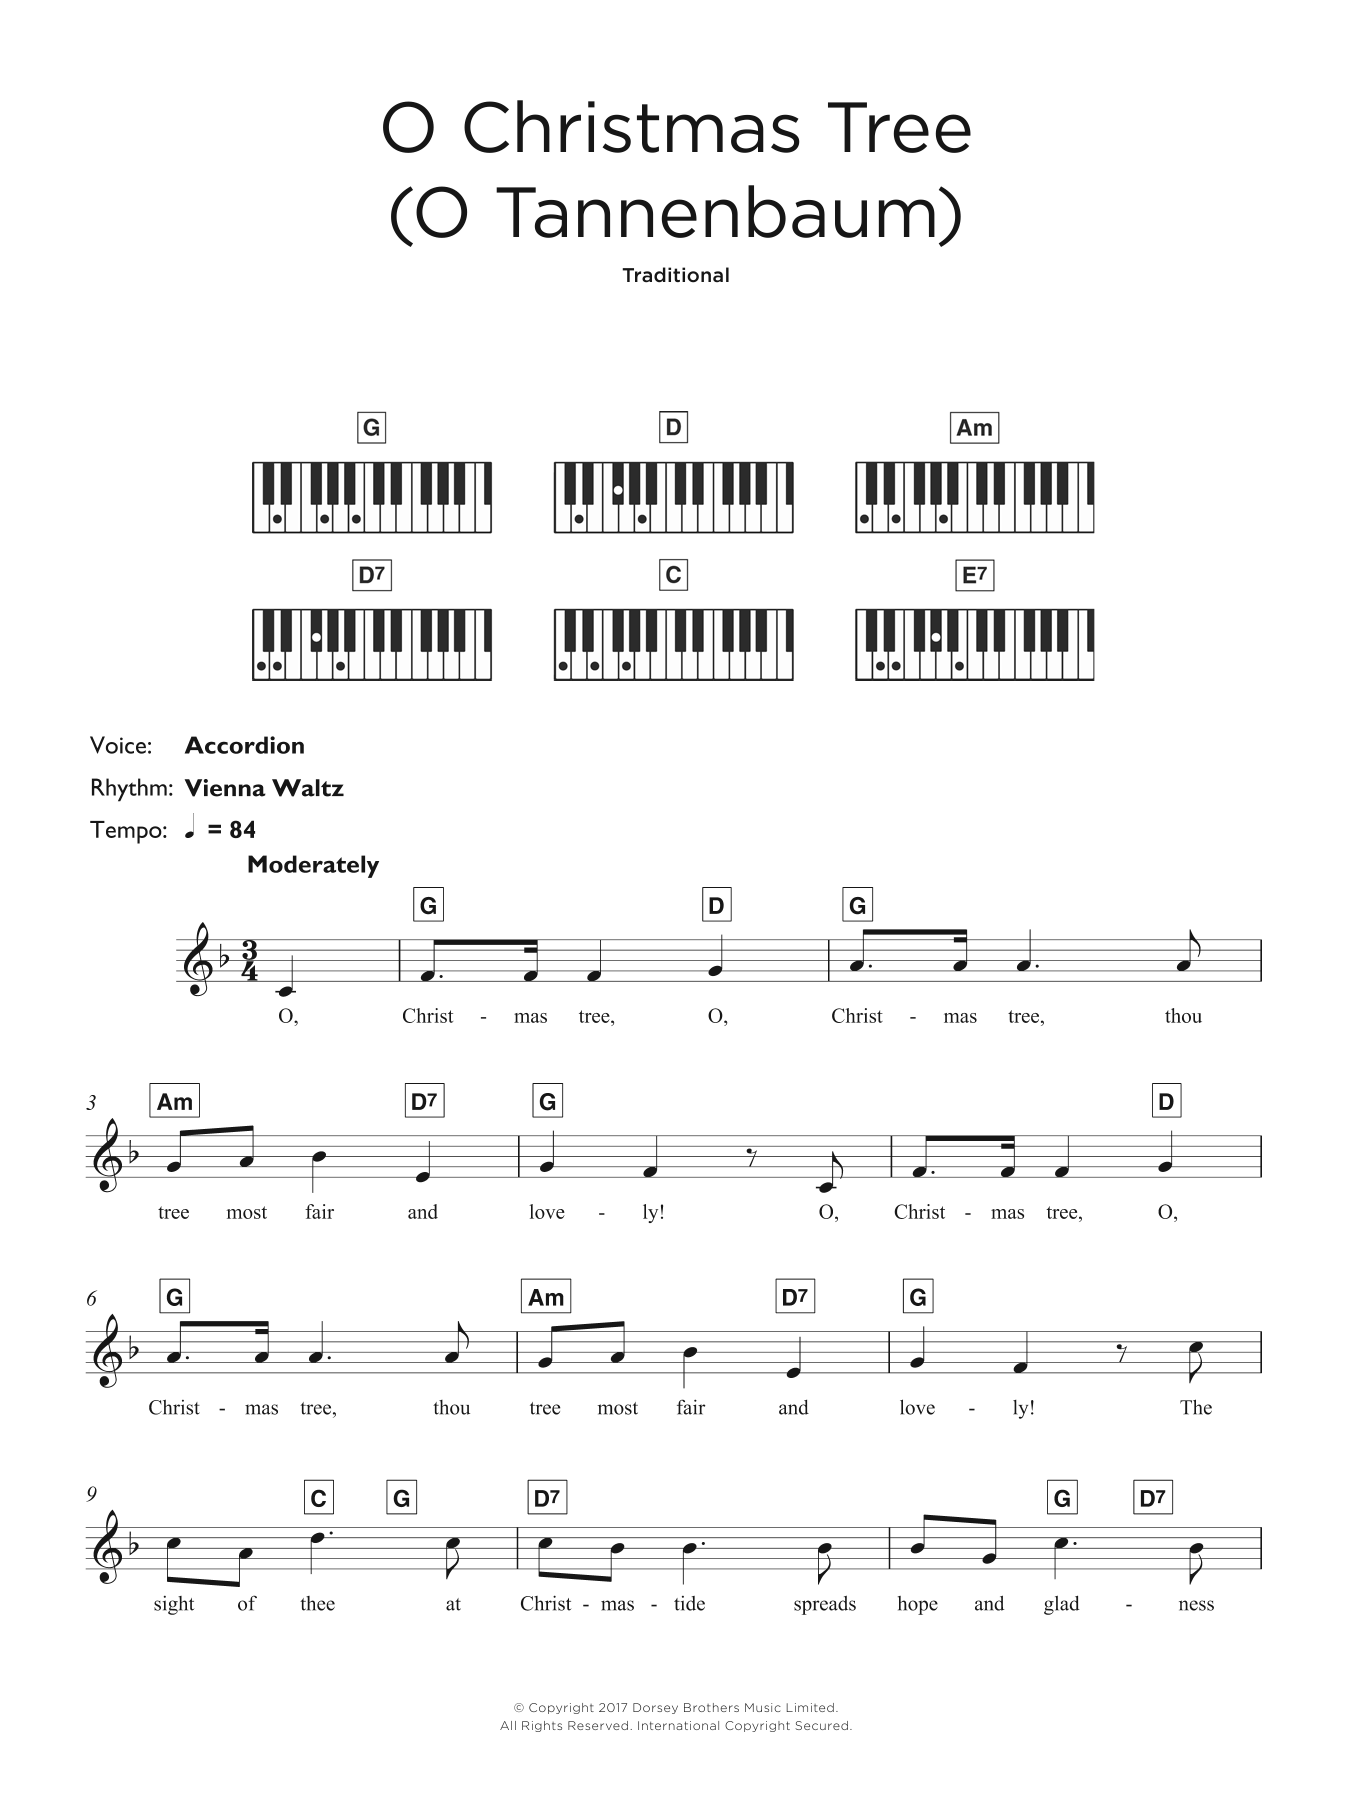 Christmas Carol O Christmas Tree (O Tannenbaum) Sheet Music Notes & Chords for Keyboard - Download or Print PDF